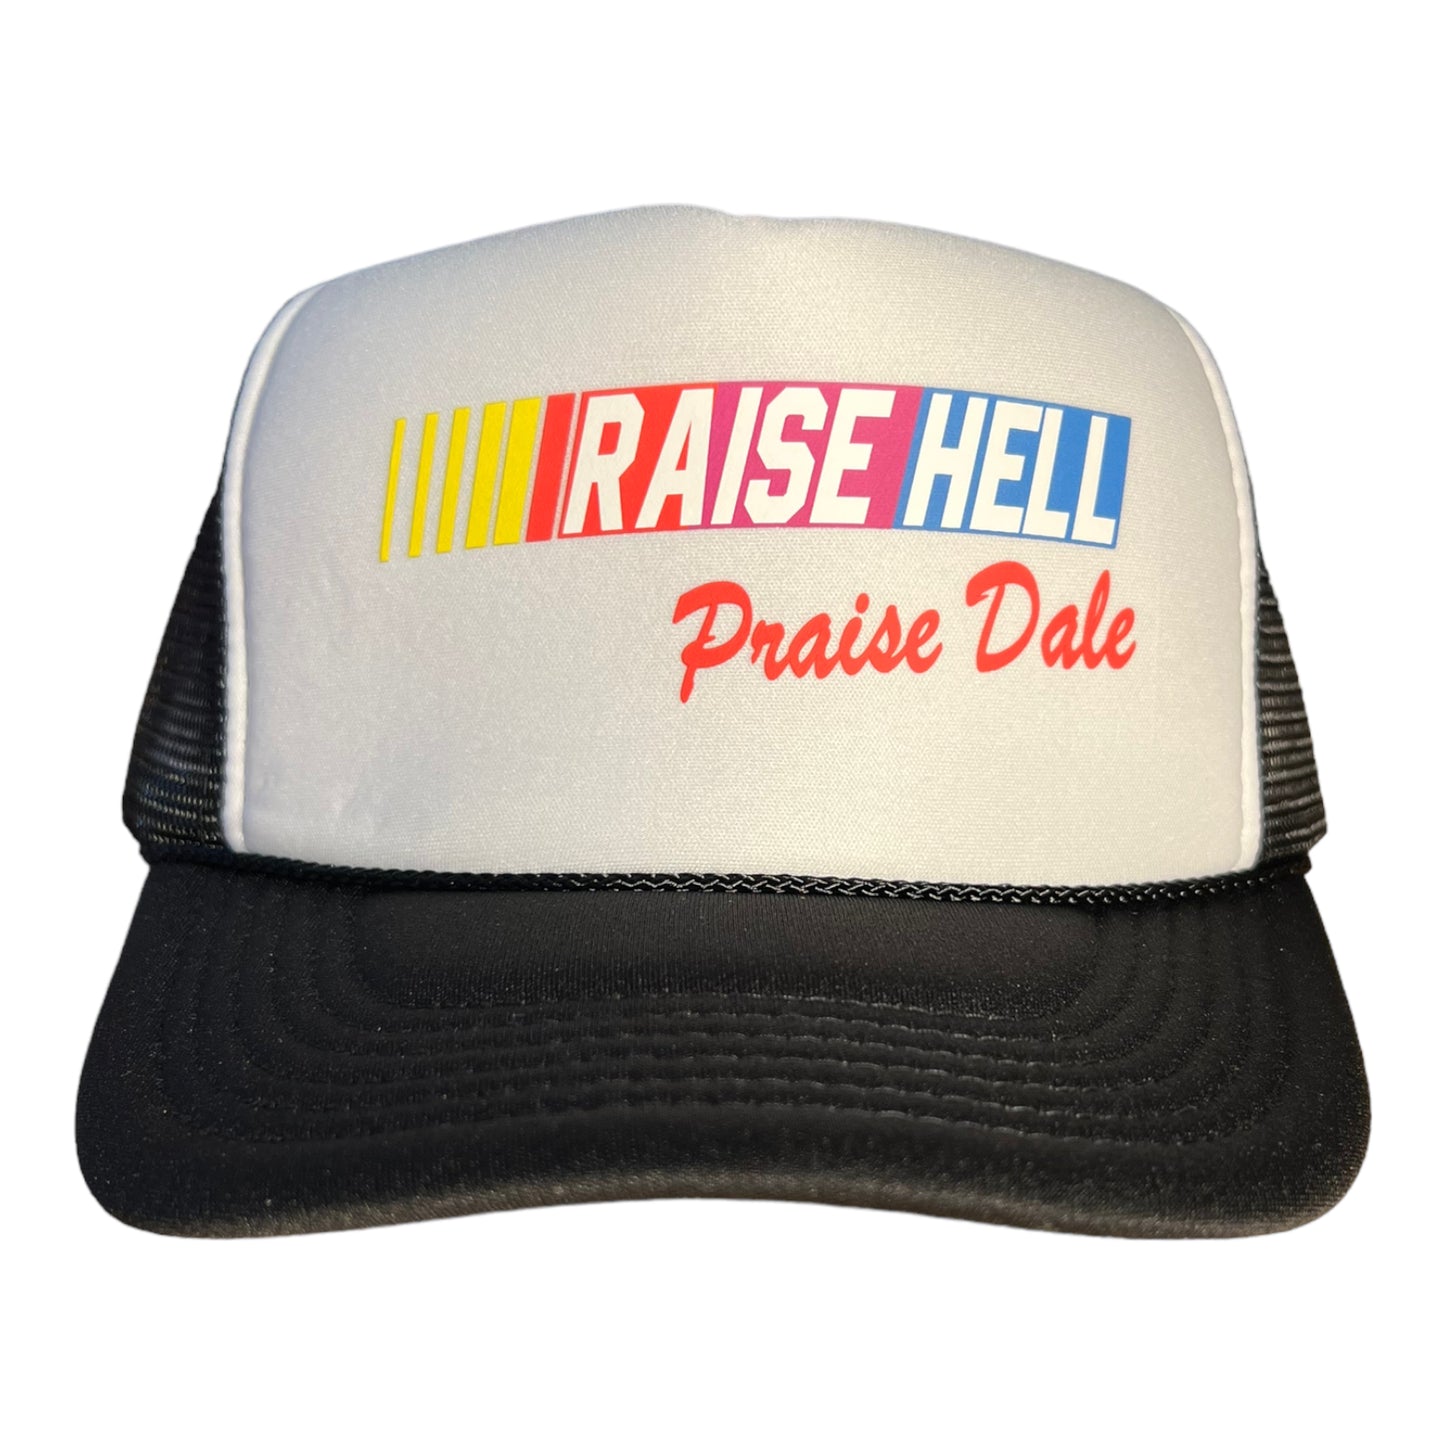 Raise Hell Praise Dale Trucker Hat Funny Trucker Hat Black/White Hat